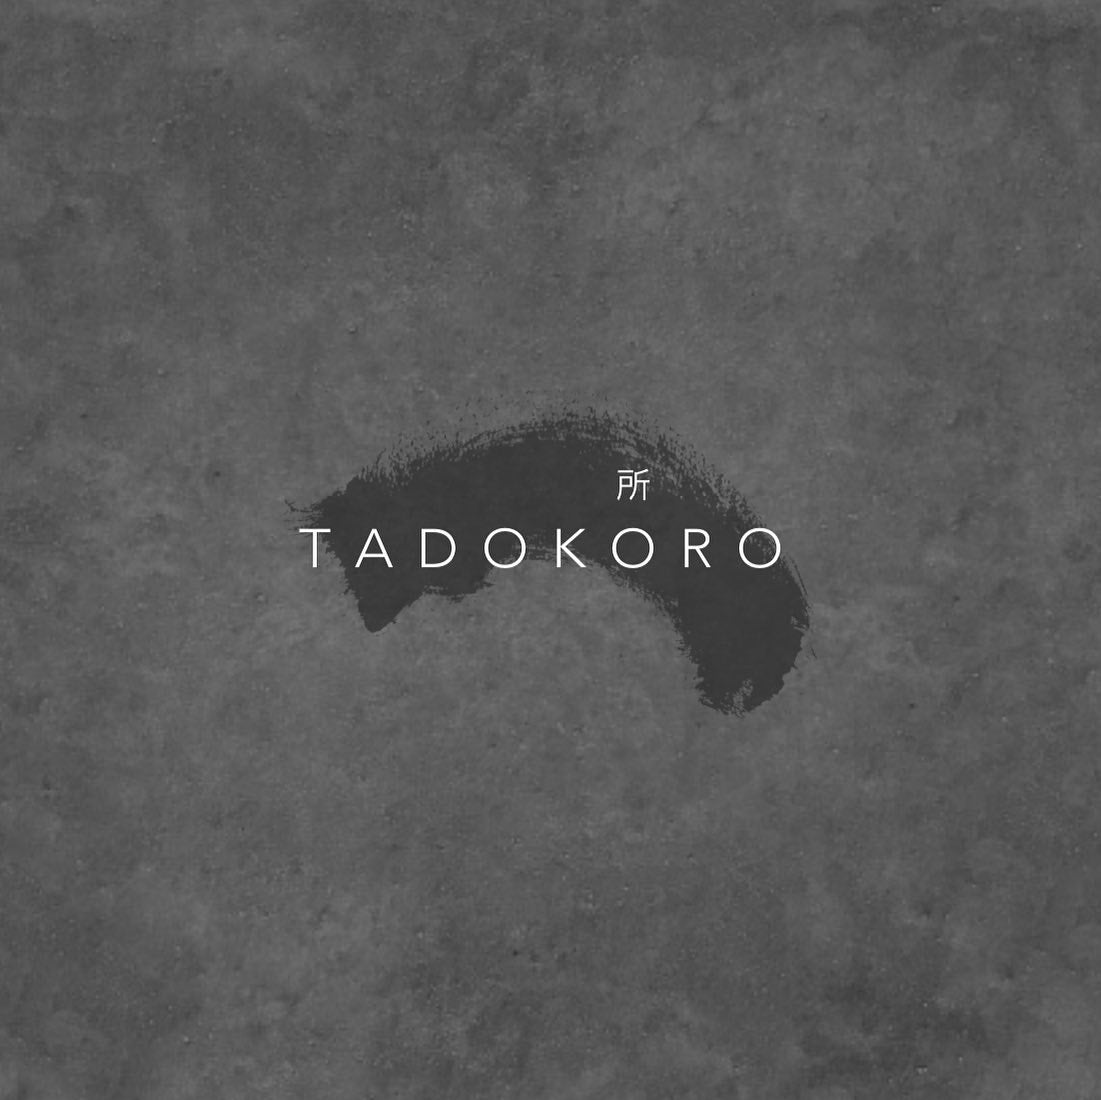 Tadokoro